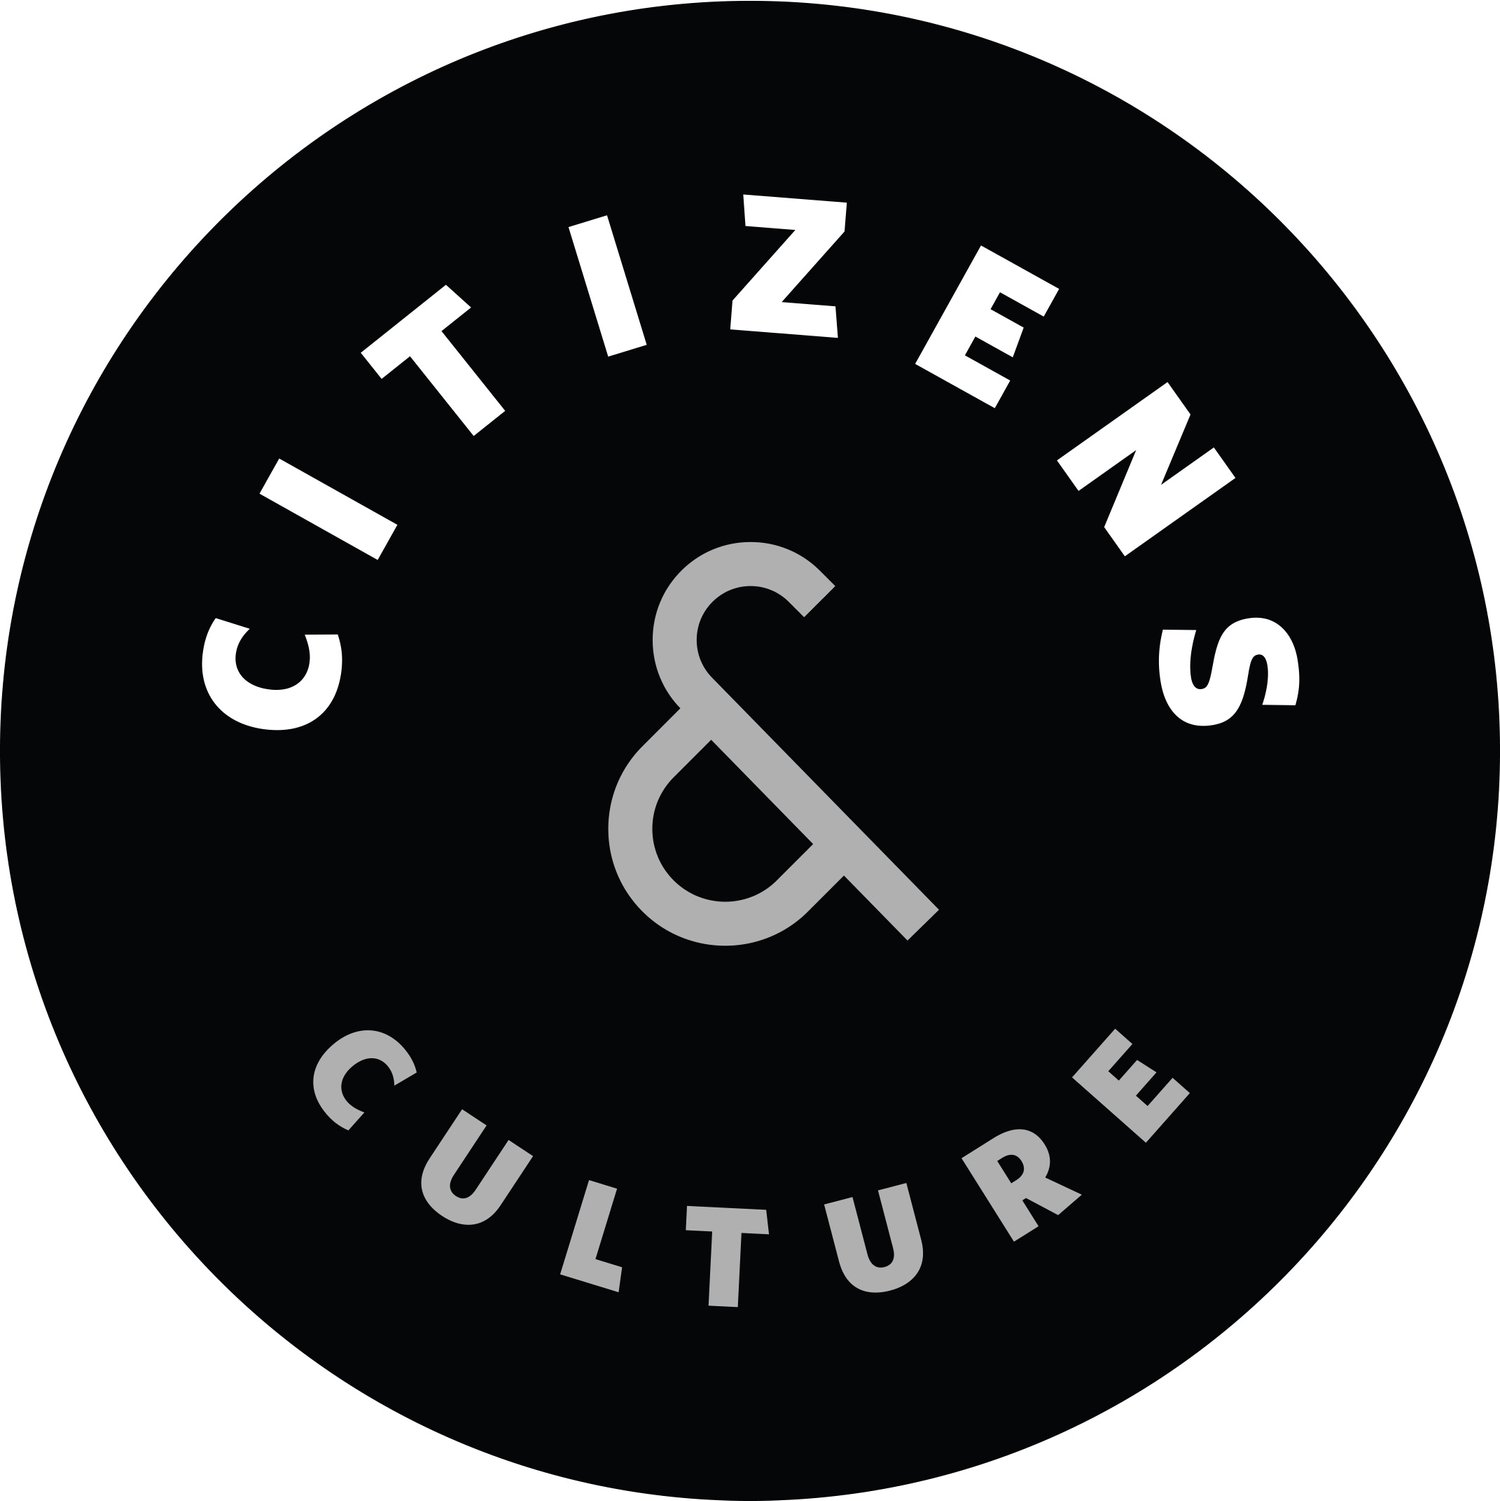 Citizens &amp; Culture